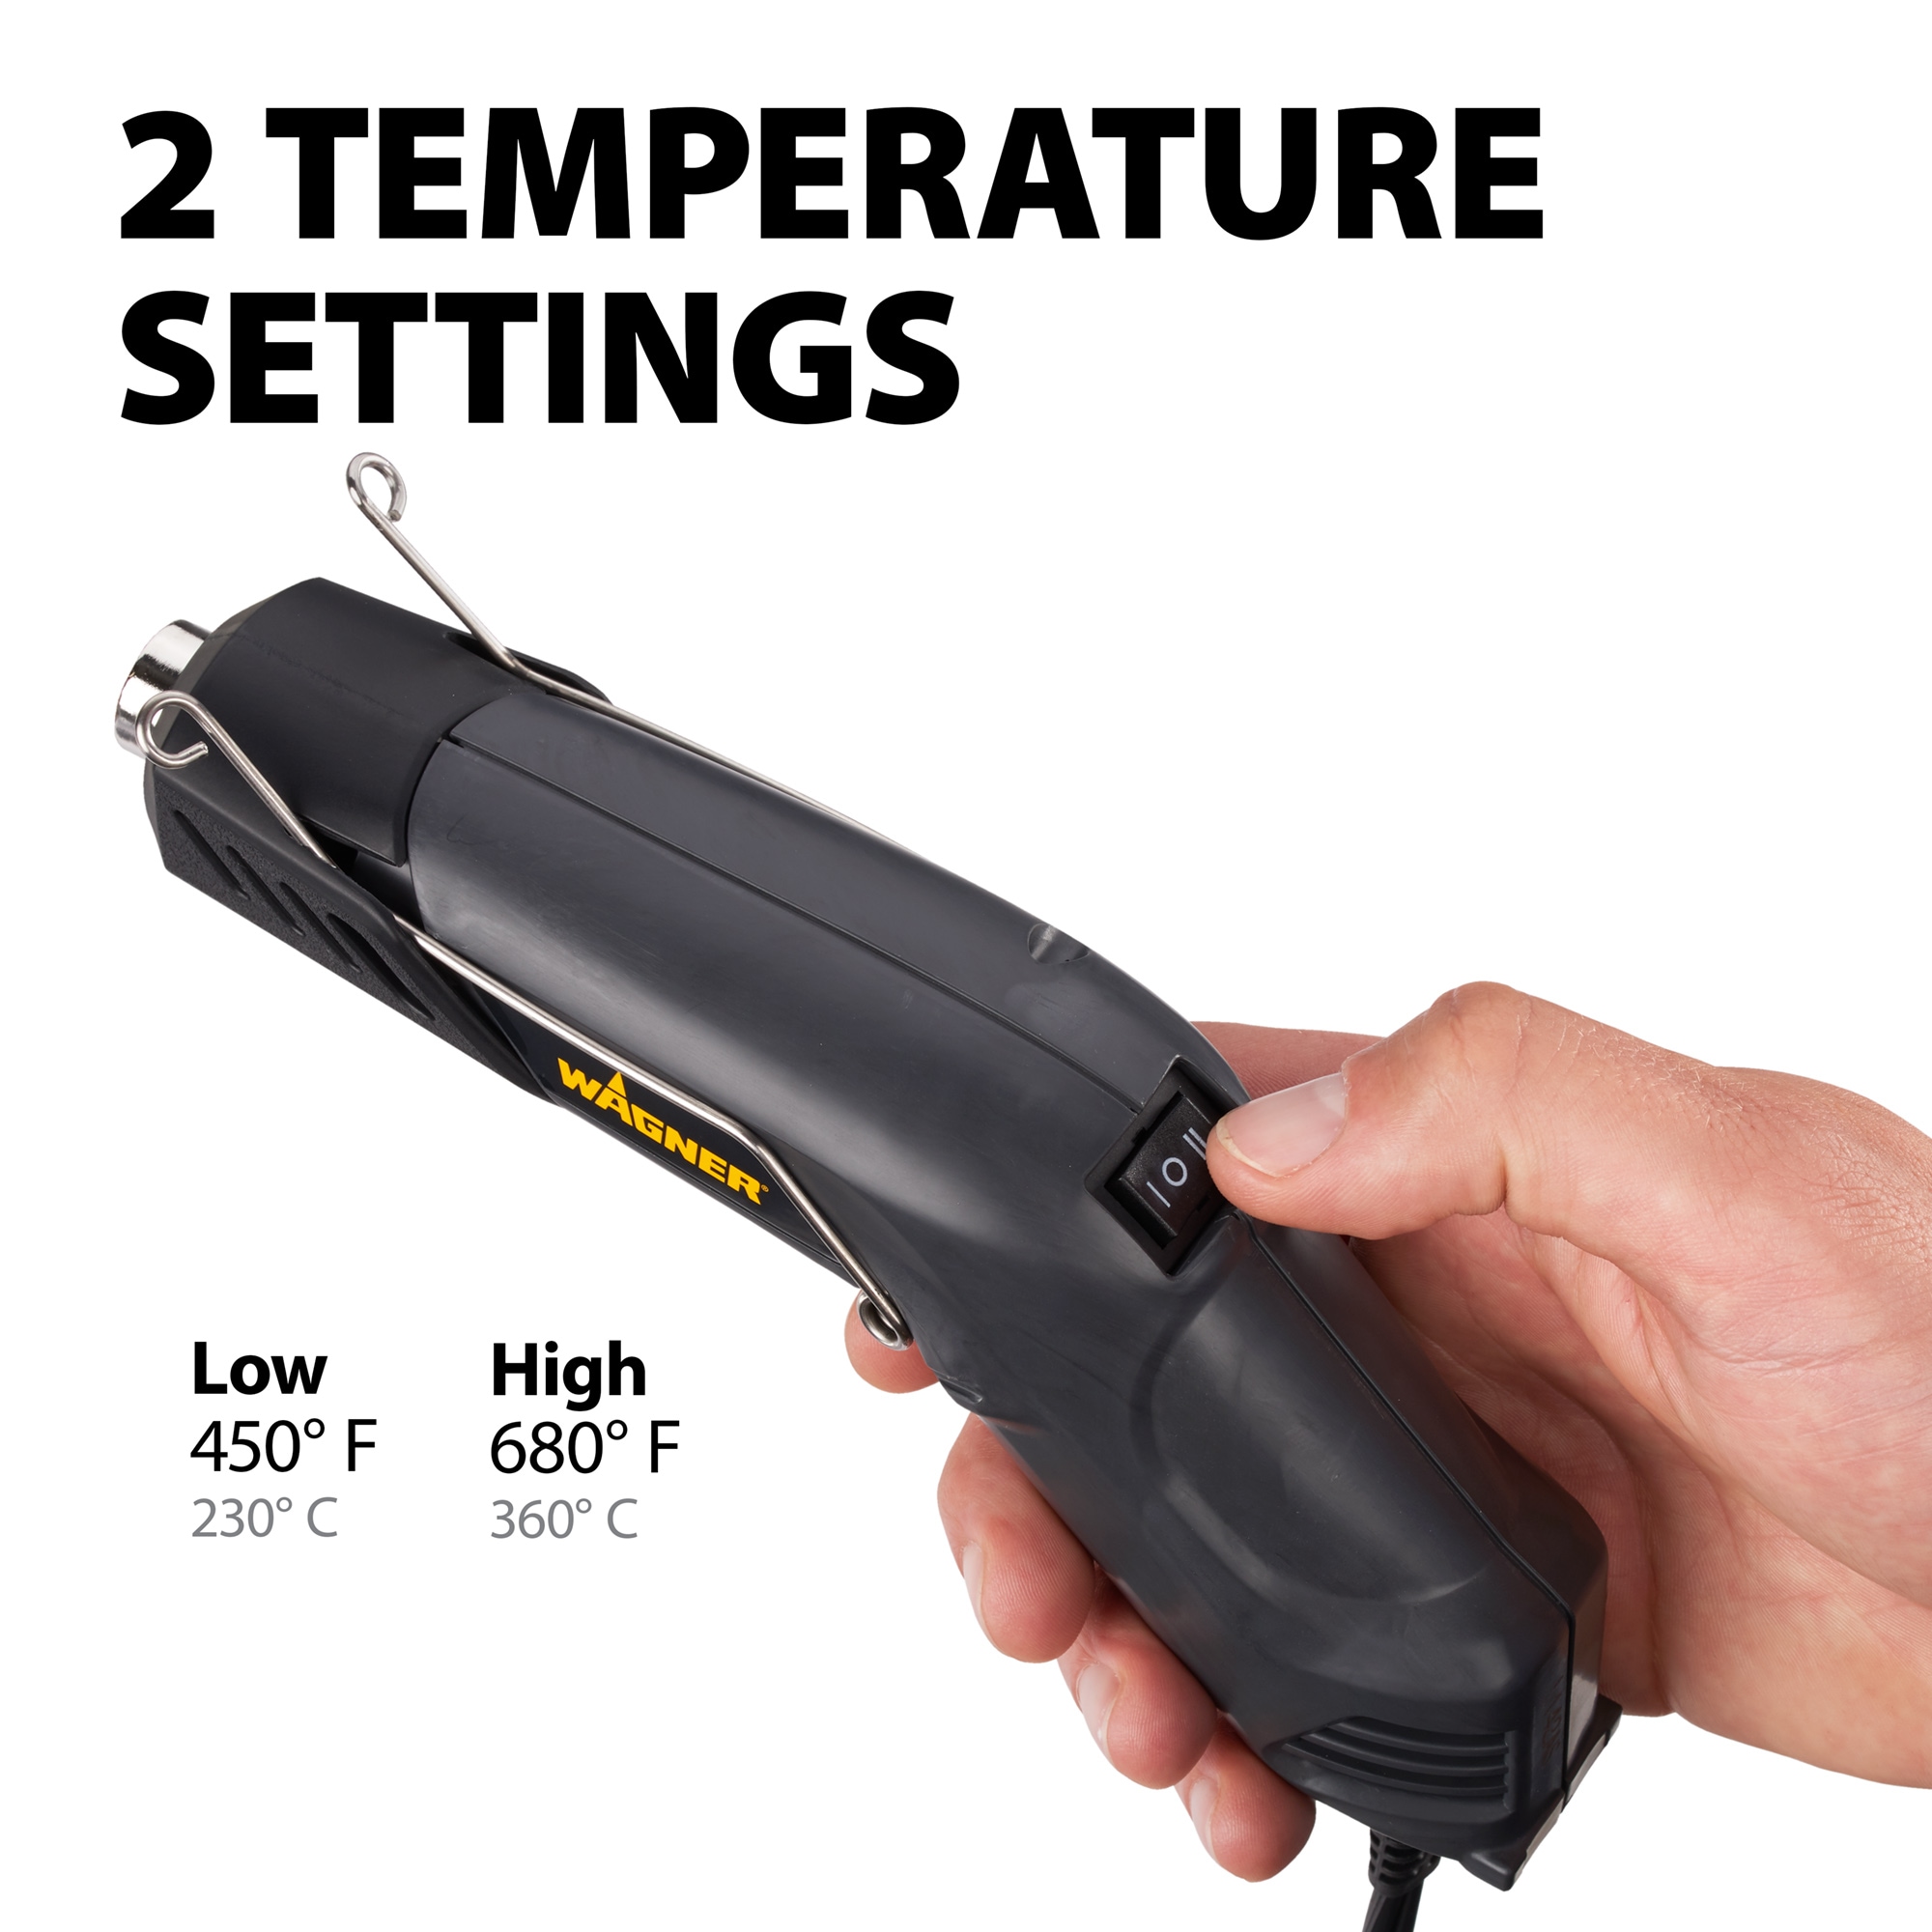 Wagner HT400 Heat Gun Craft Kit 1225-BTU Heat Gun in the Heat Guns  department at